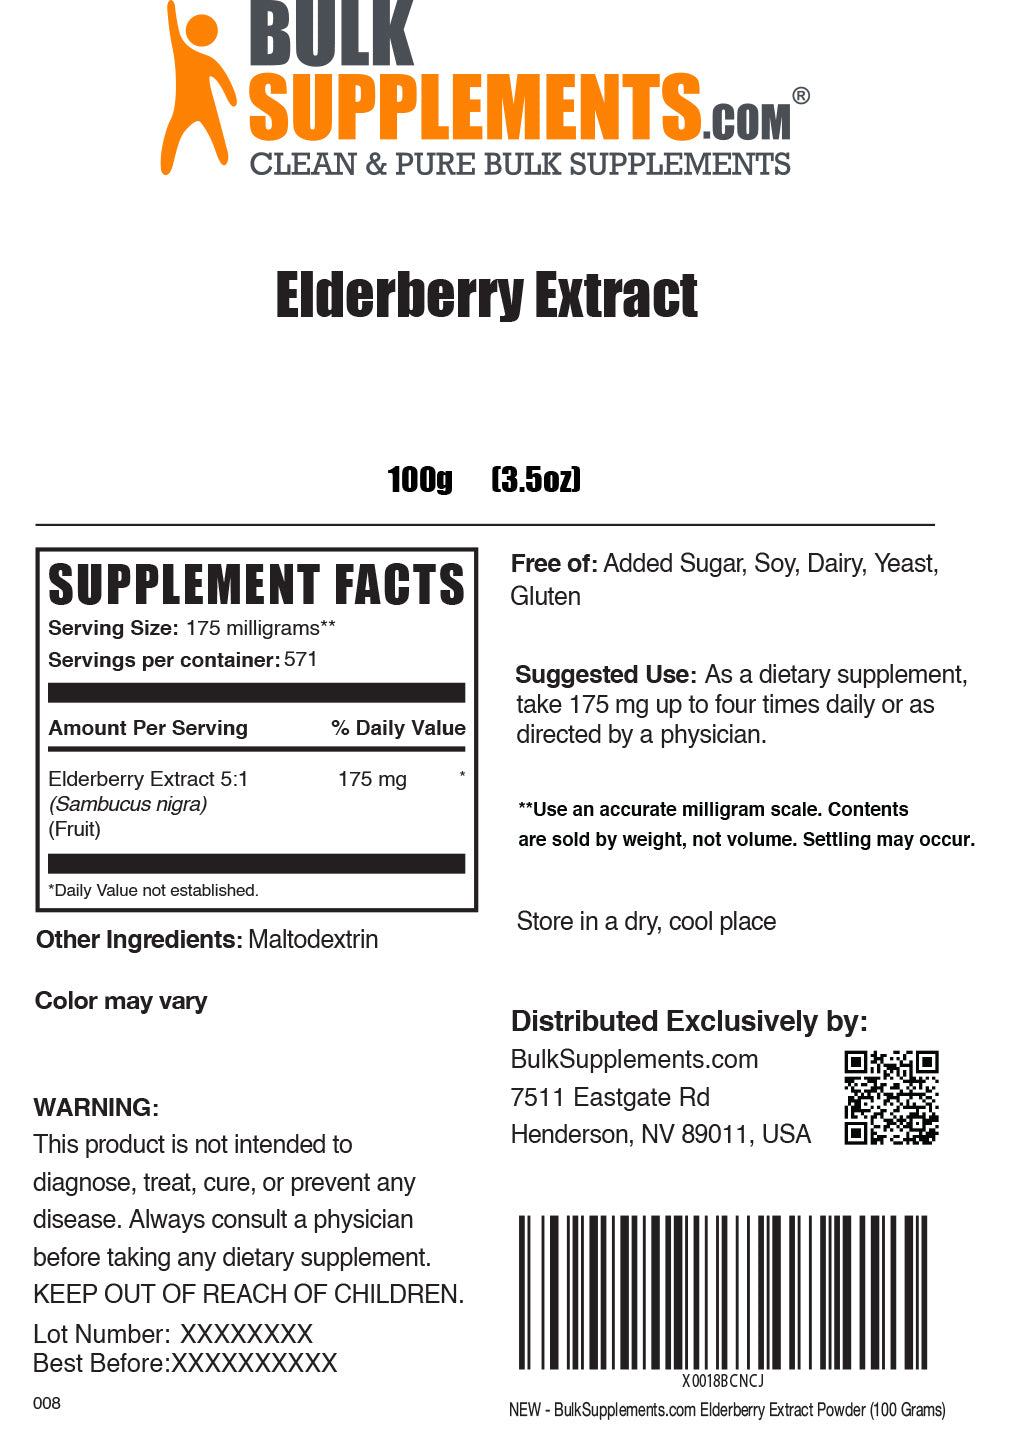 Supplement Facts for Elderberry Extract